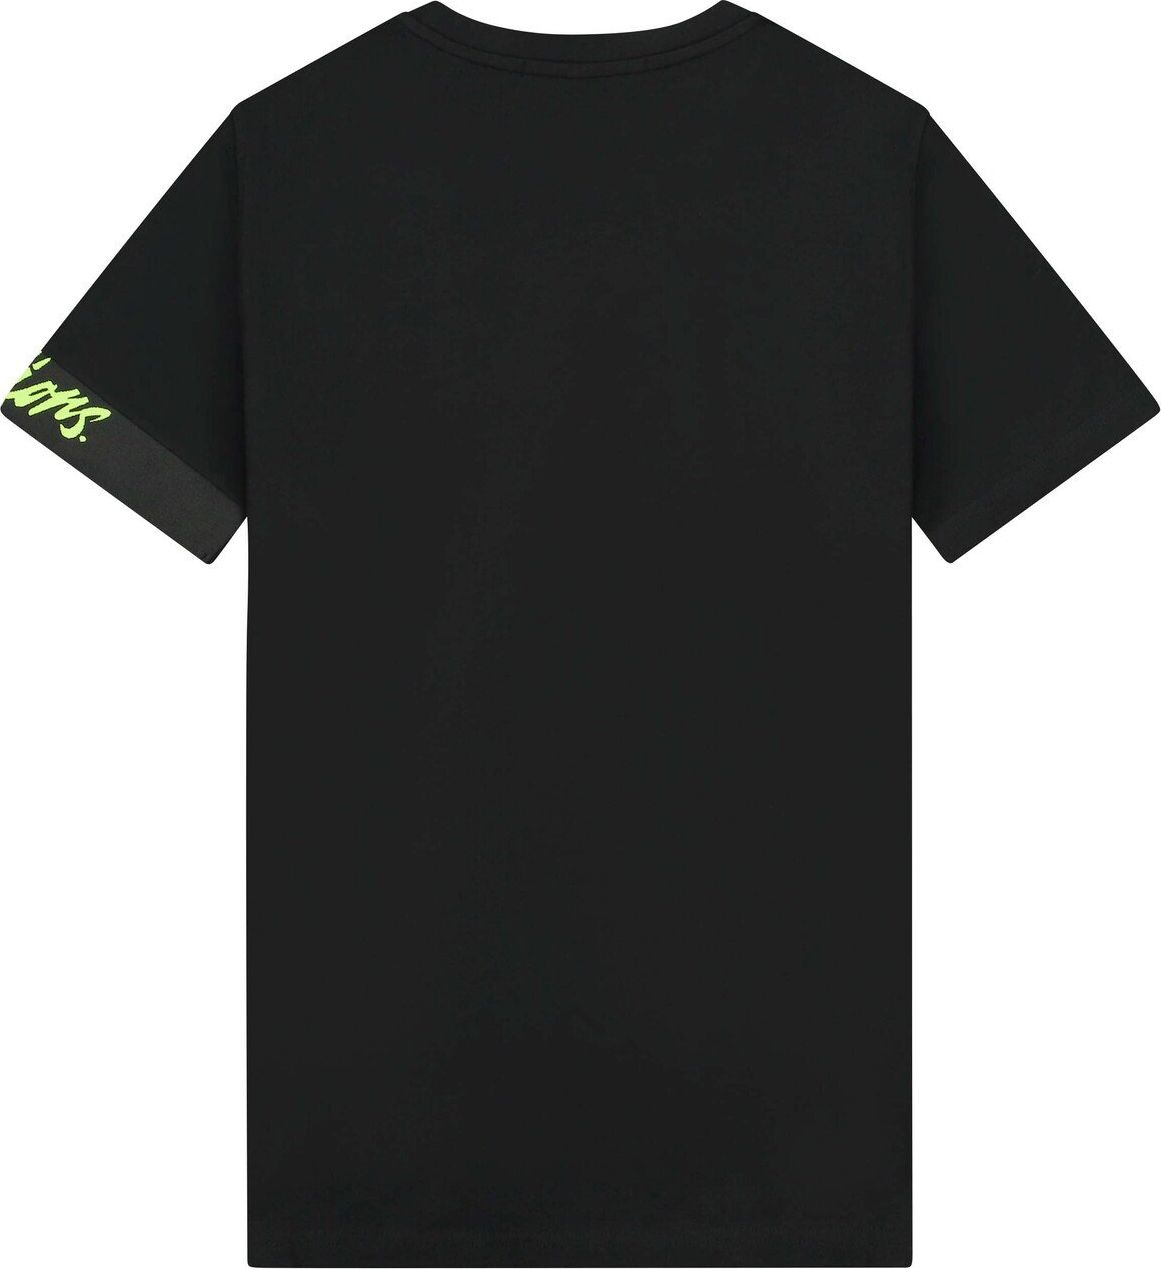 Malelions Captain T-Shirt 2 - Black/Neon Ye Zwart